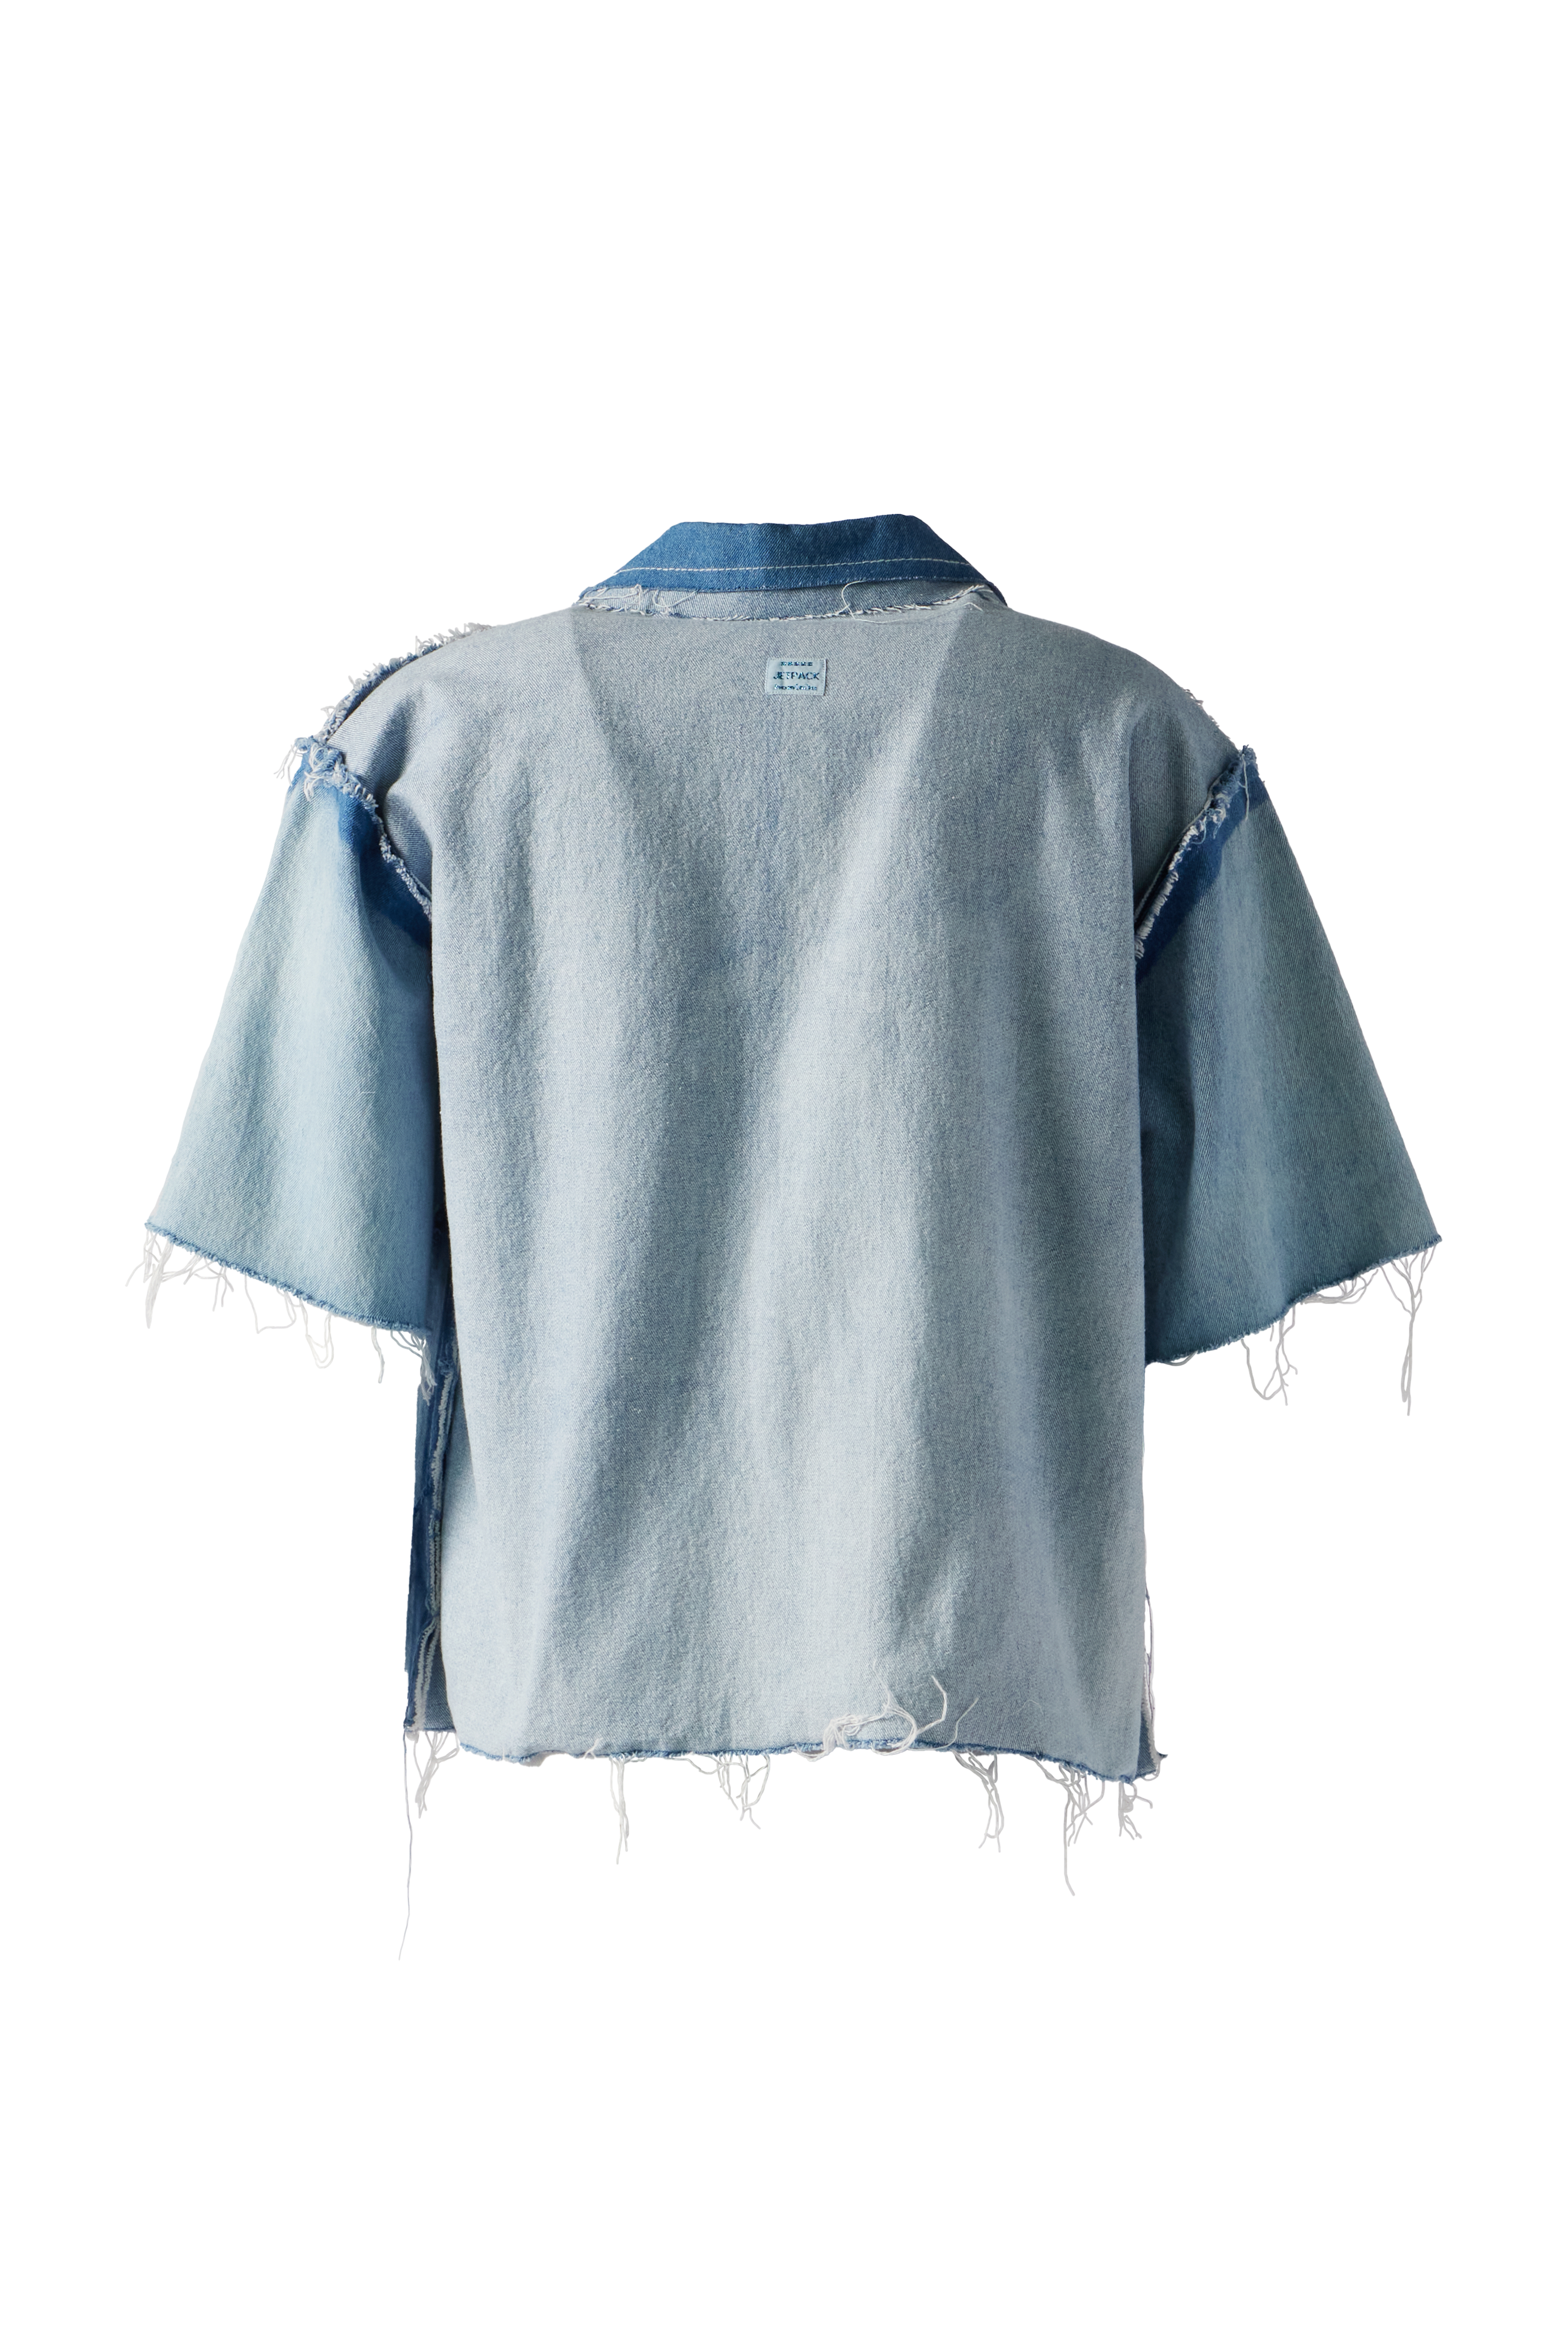 JETPACK HOM(M)E - Bleach Denim Shirt product image